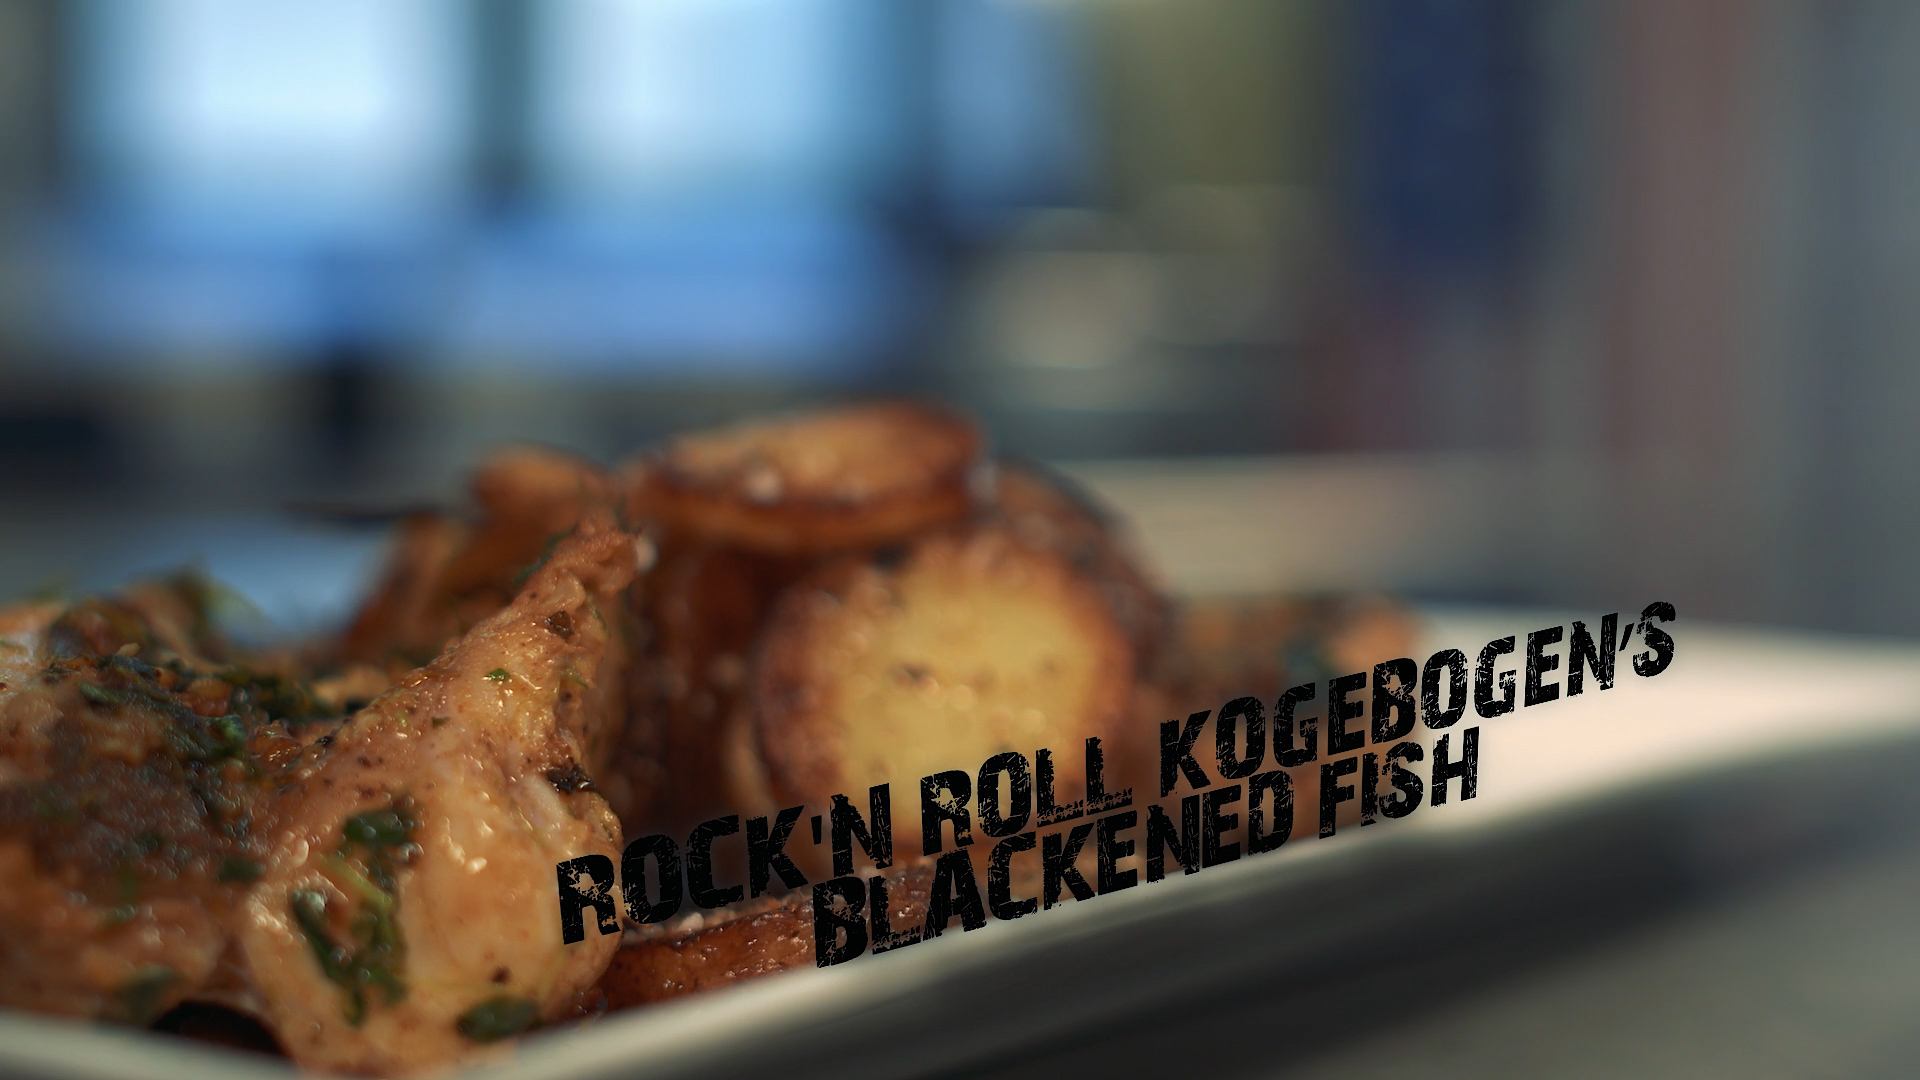 Rock’en Roll Kogebogen – Blackened Fish